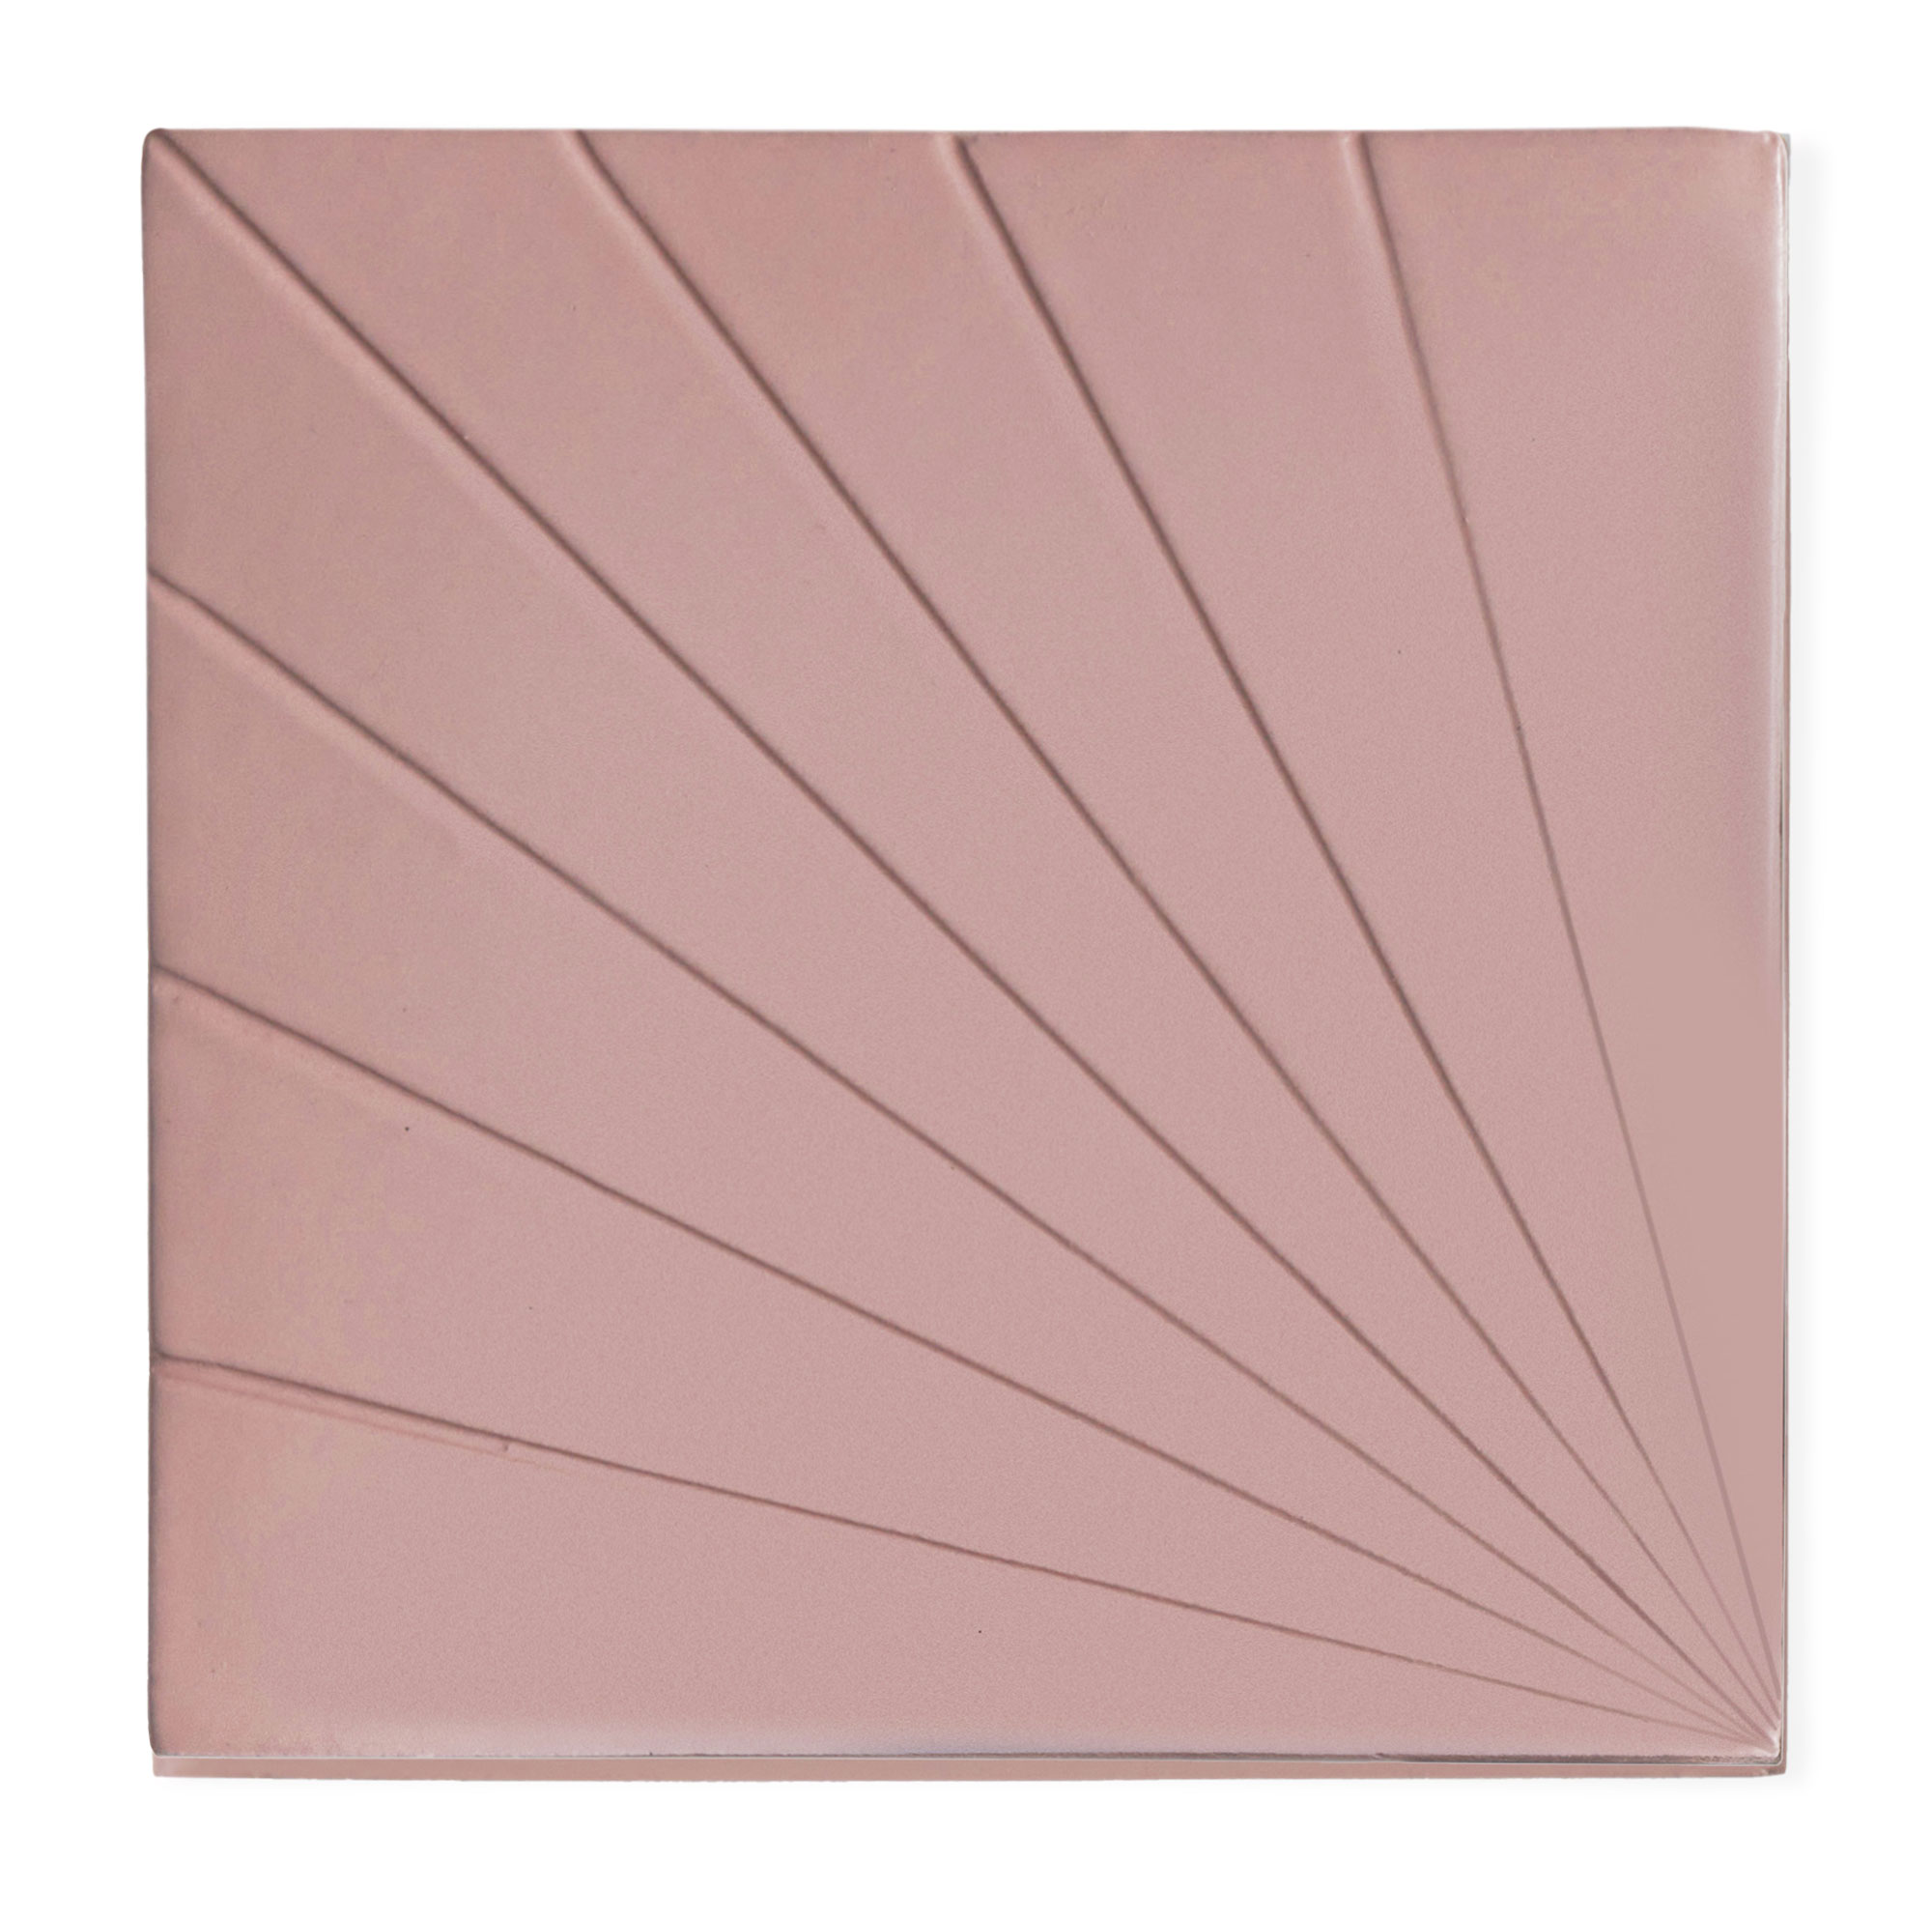 Tulum Pink 6x6 - Dimensional Relief Artisan Ceramic Tile